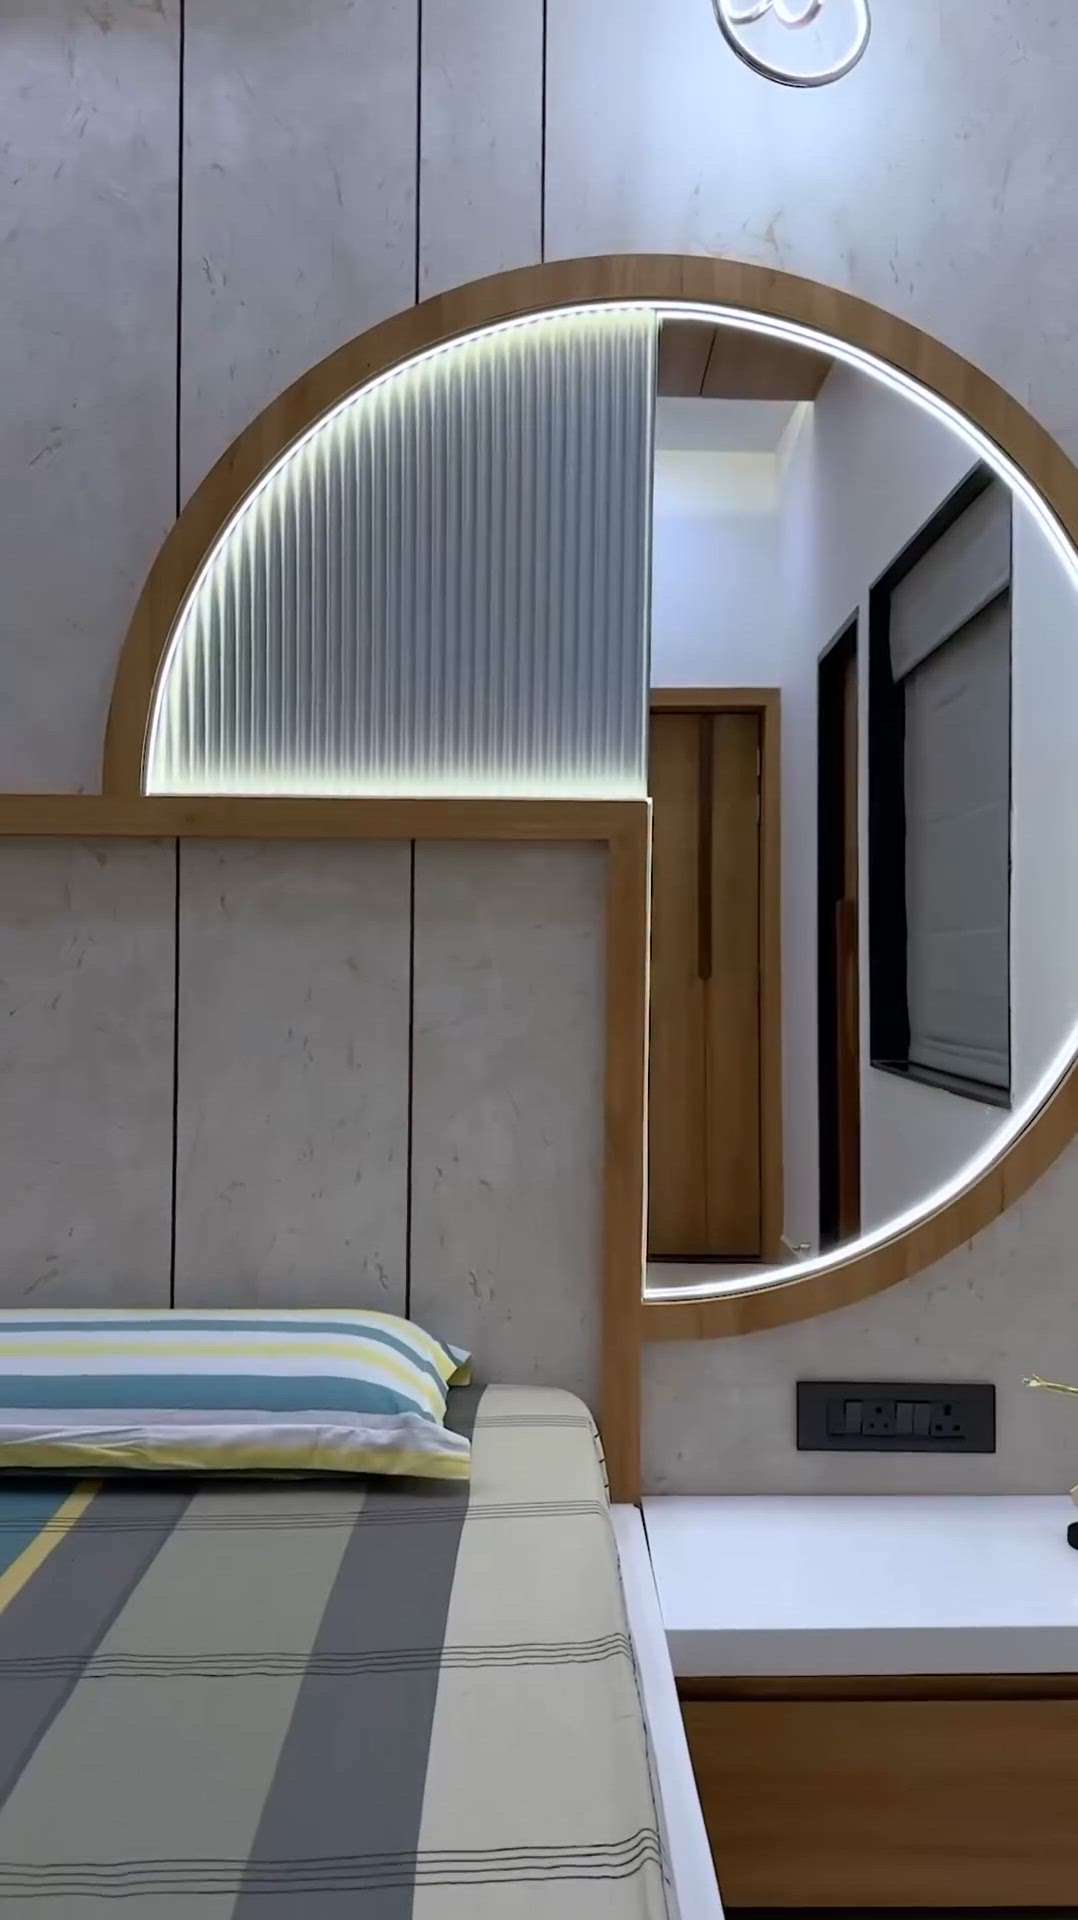 #InteriorDesigner #BedroomDecor #BedroomDesigns #ModularKitchen #Modularfurniture #modularwardrobe #Sofas #Beds